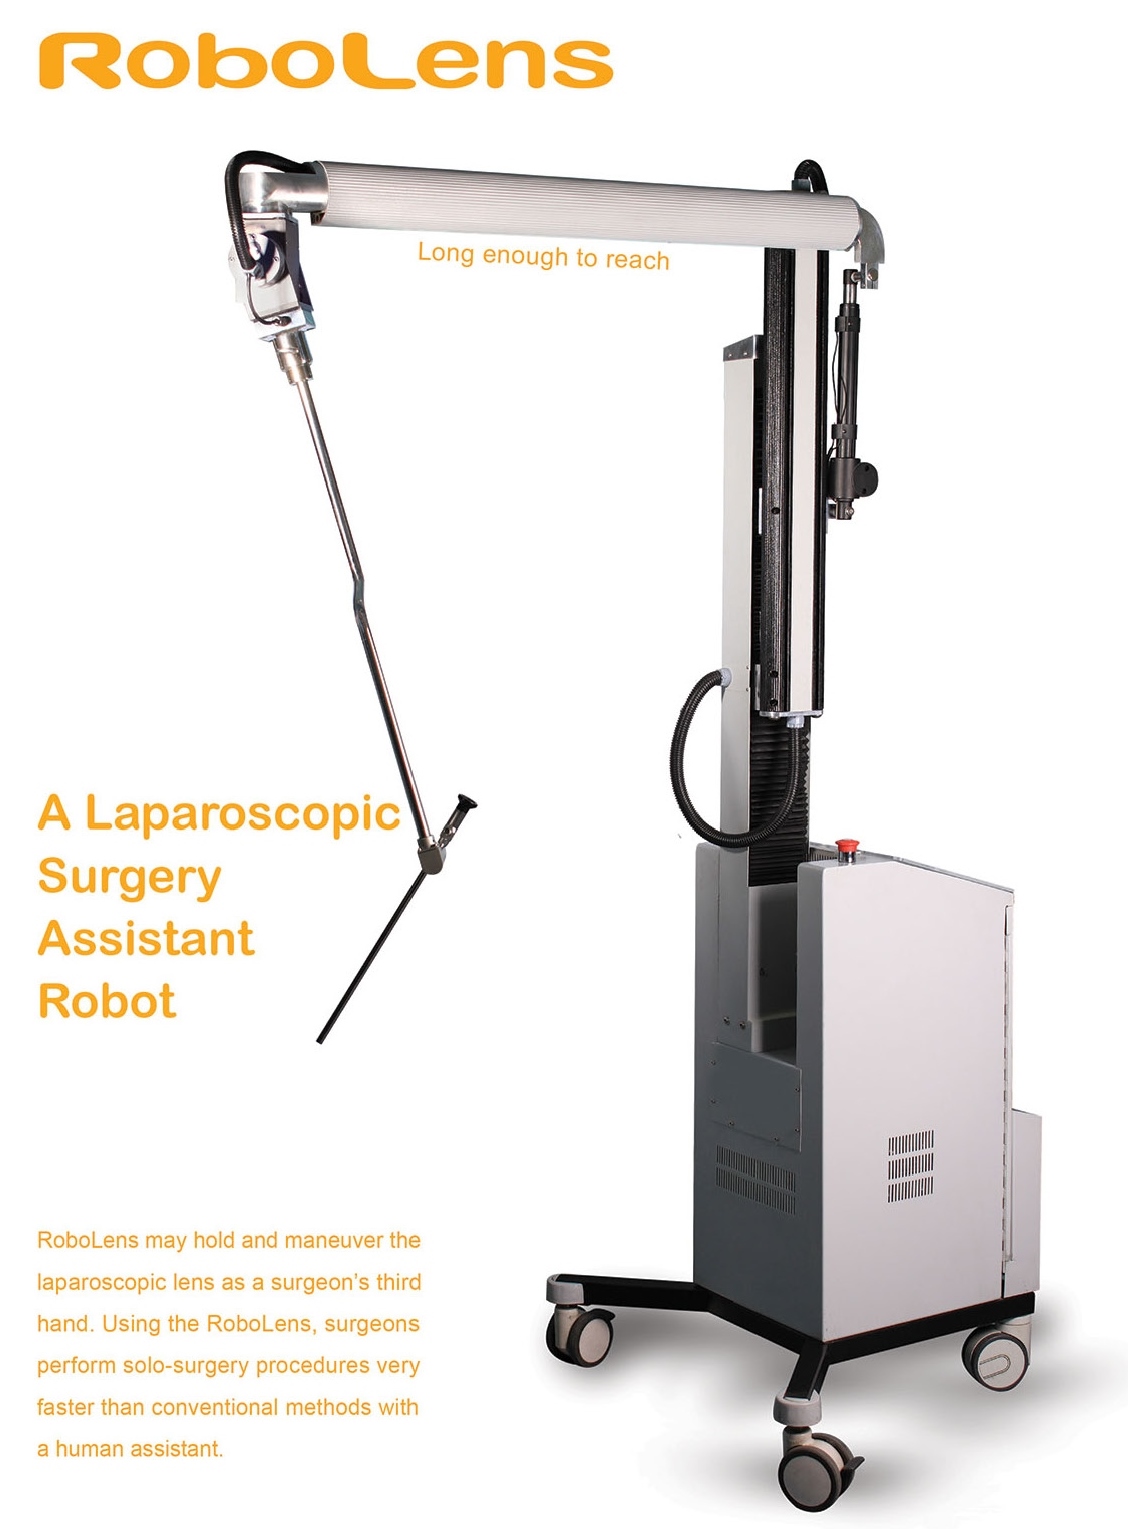 ربات دستیار در جراحی لاپاروسکوپی (روبولنز)